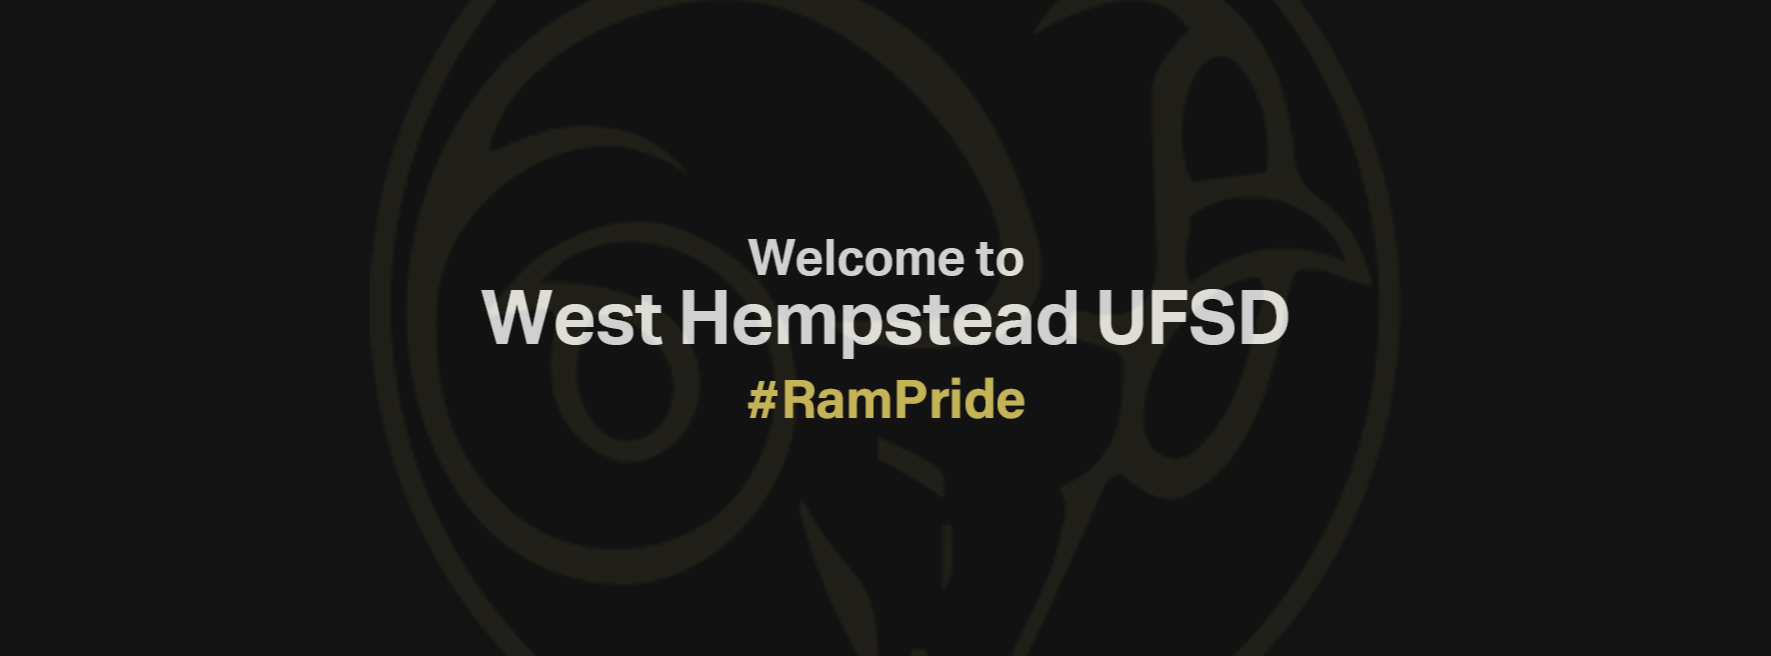 Welcome to West Hempstead UFSD #Ram Pride